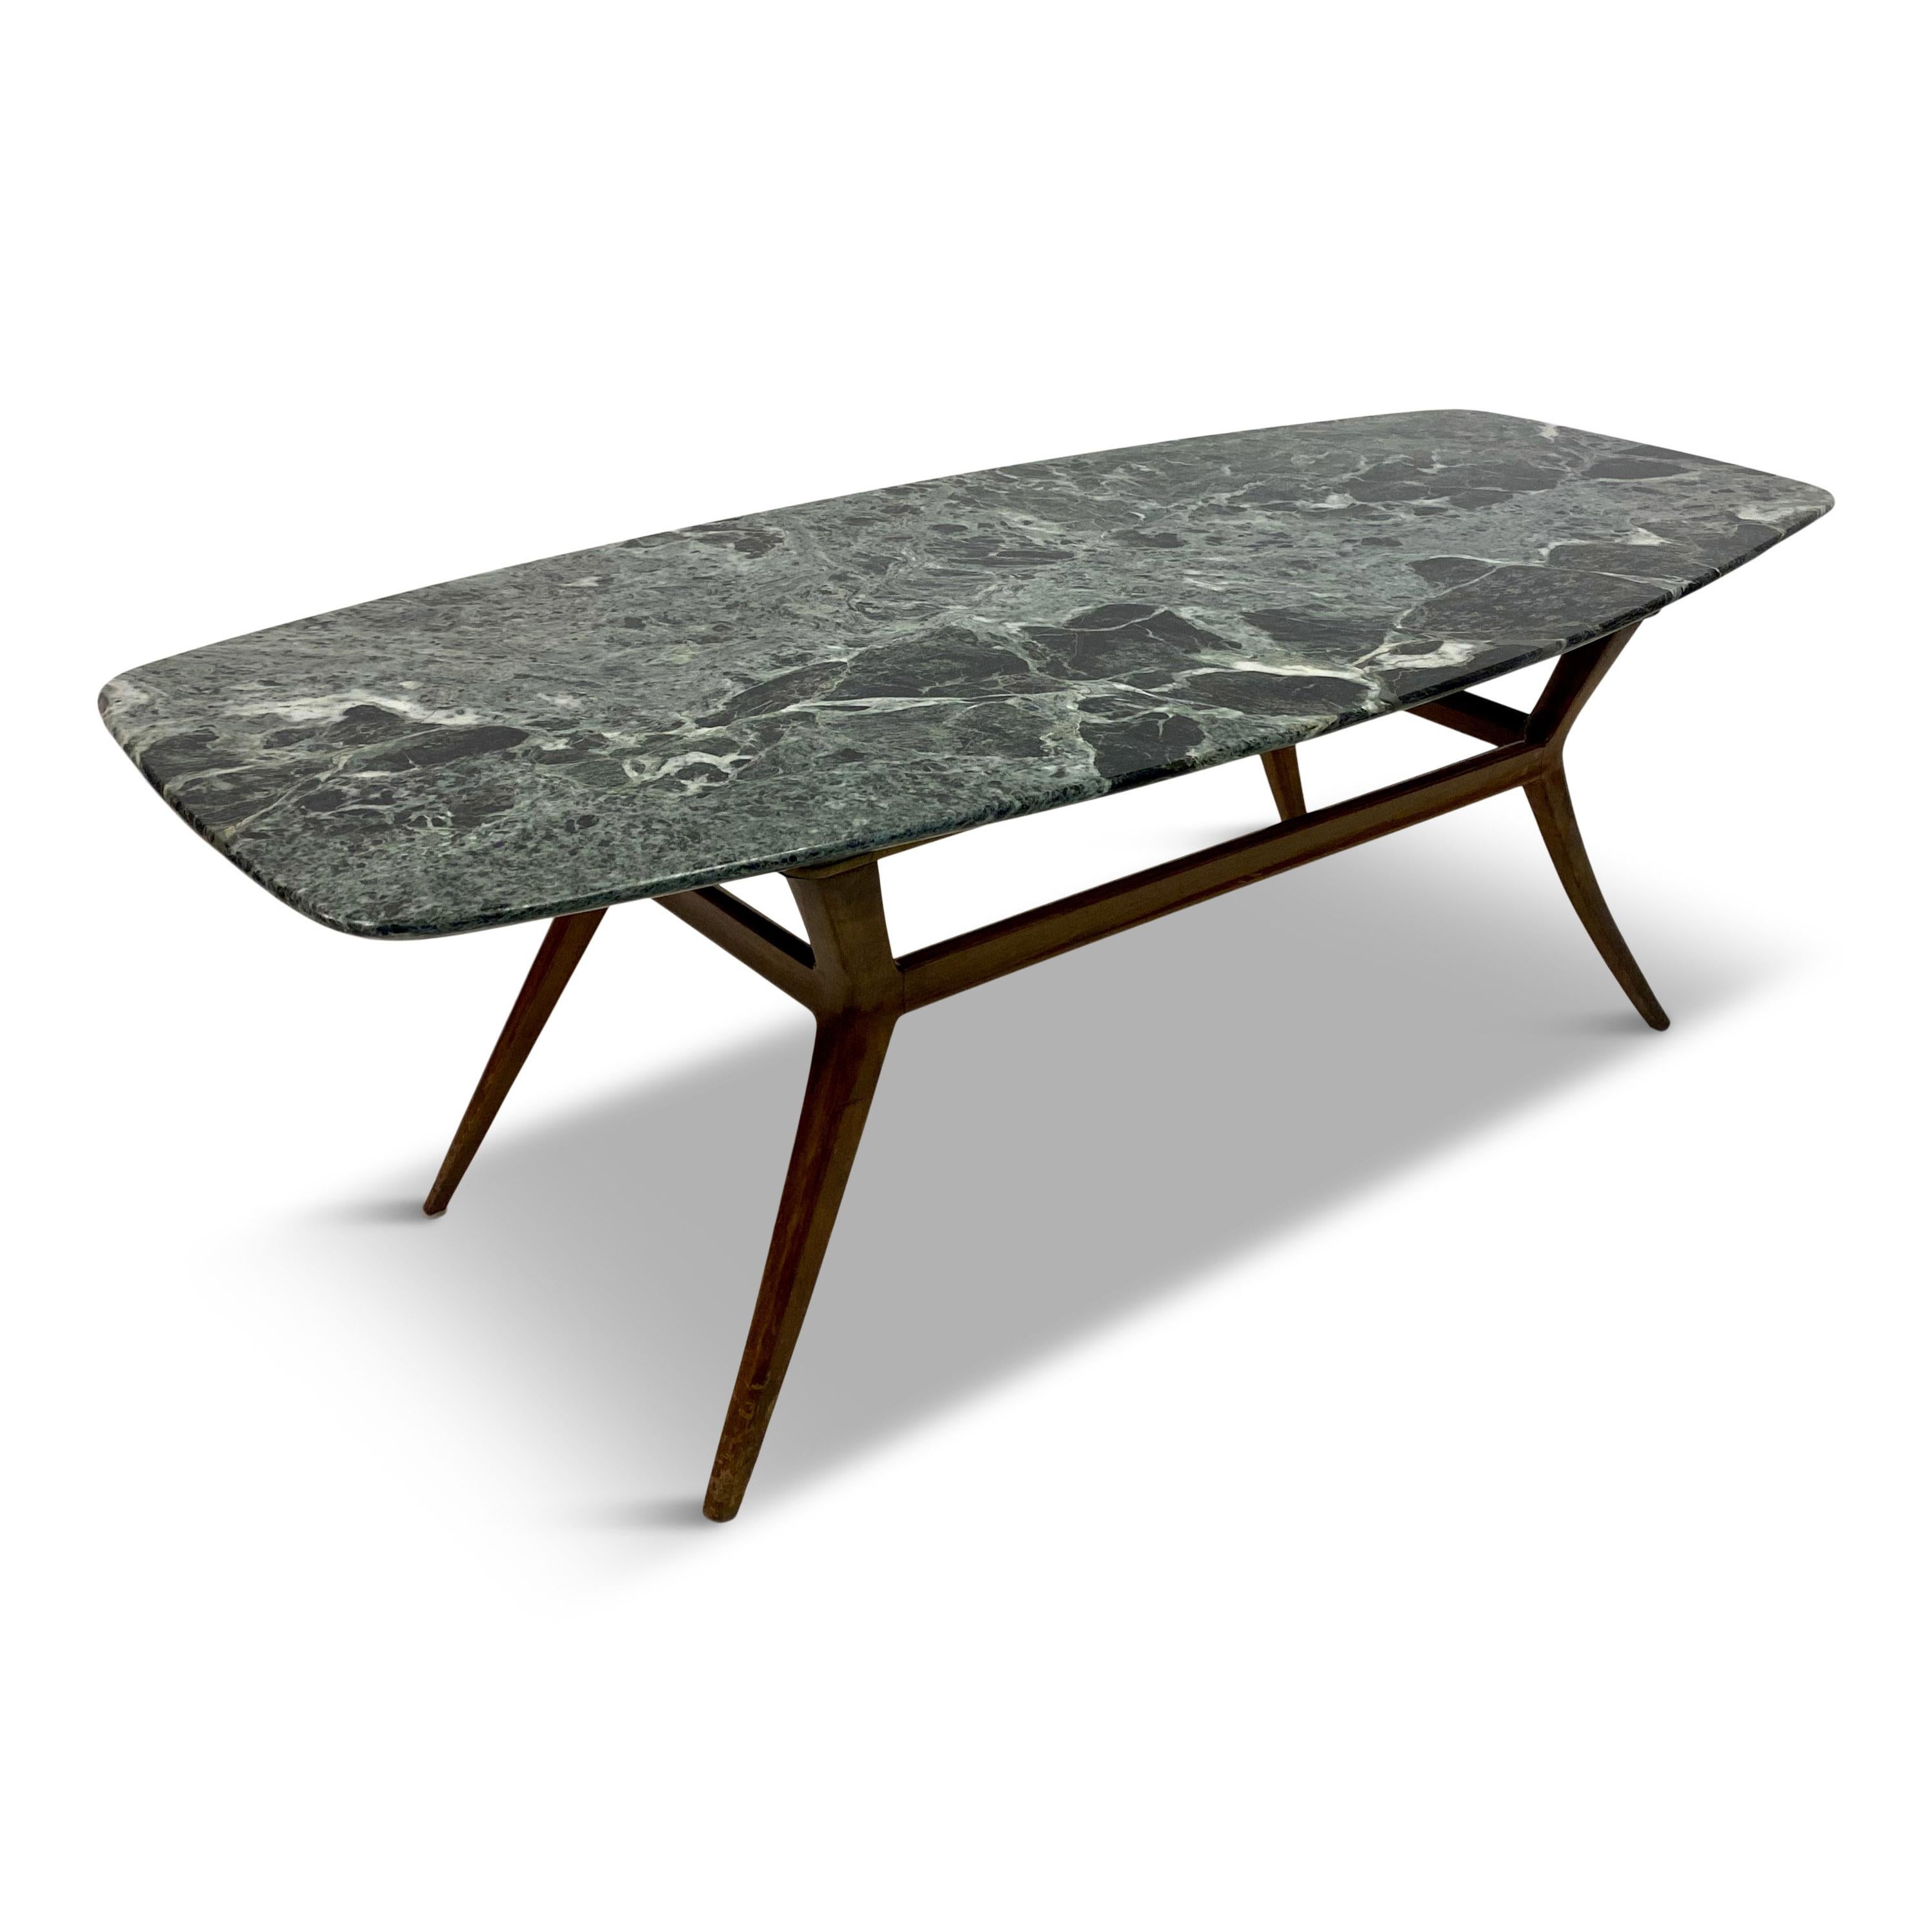 Coffee table

Striking green marble top

Elegant walnut base

Italy 1950s